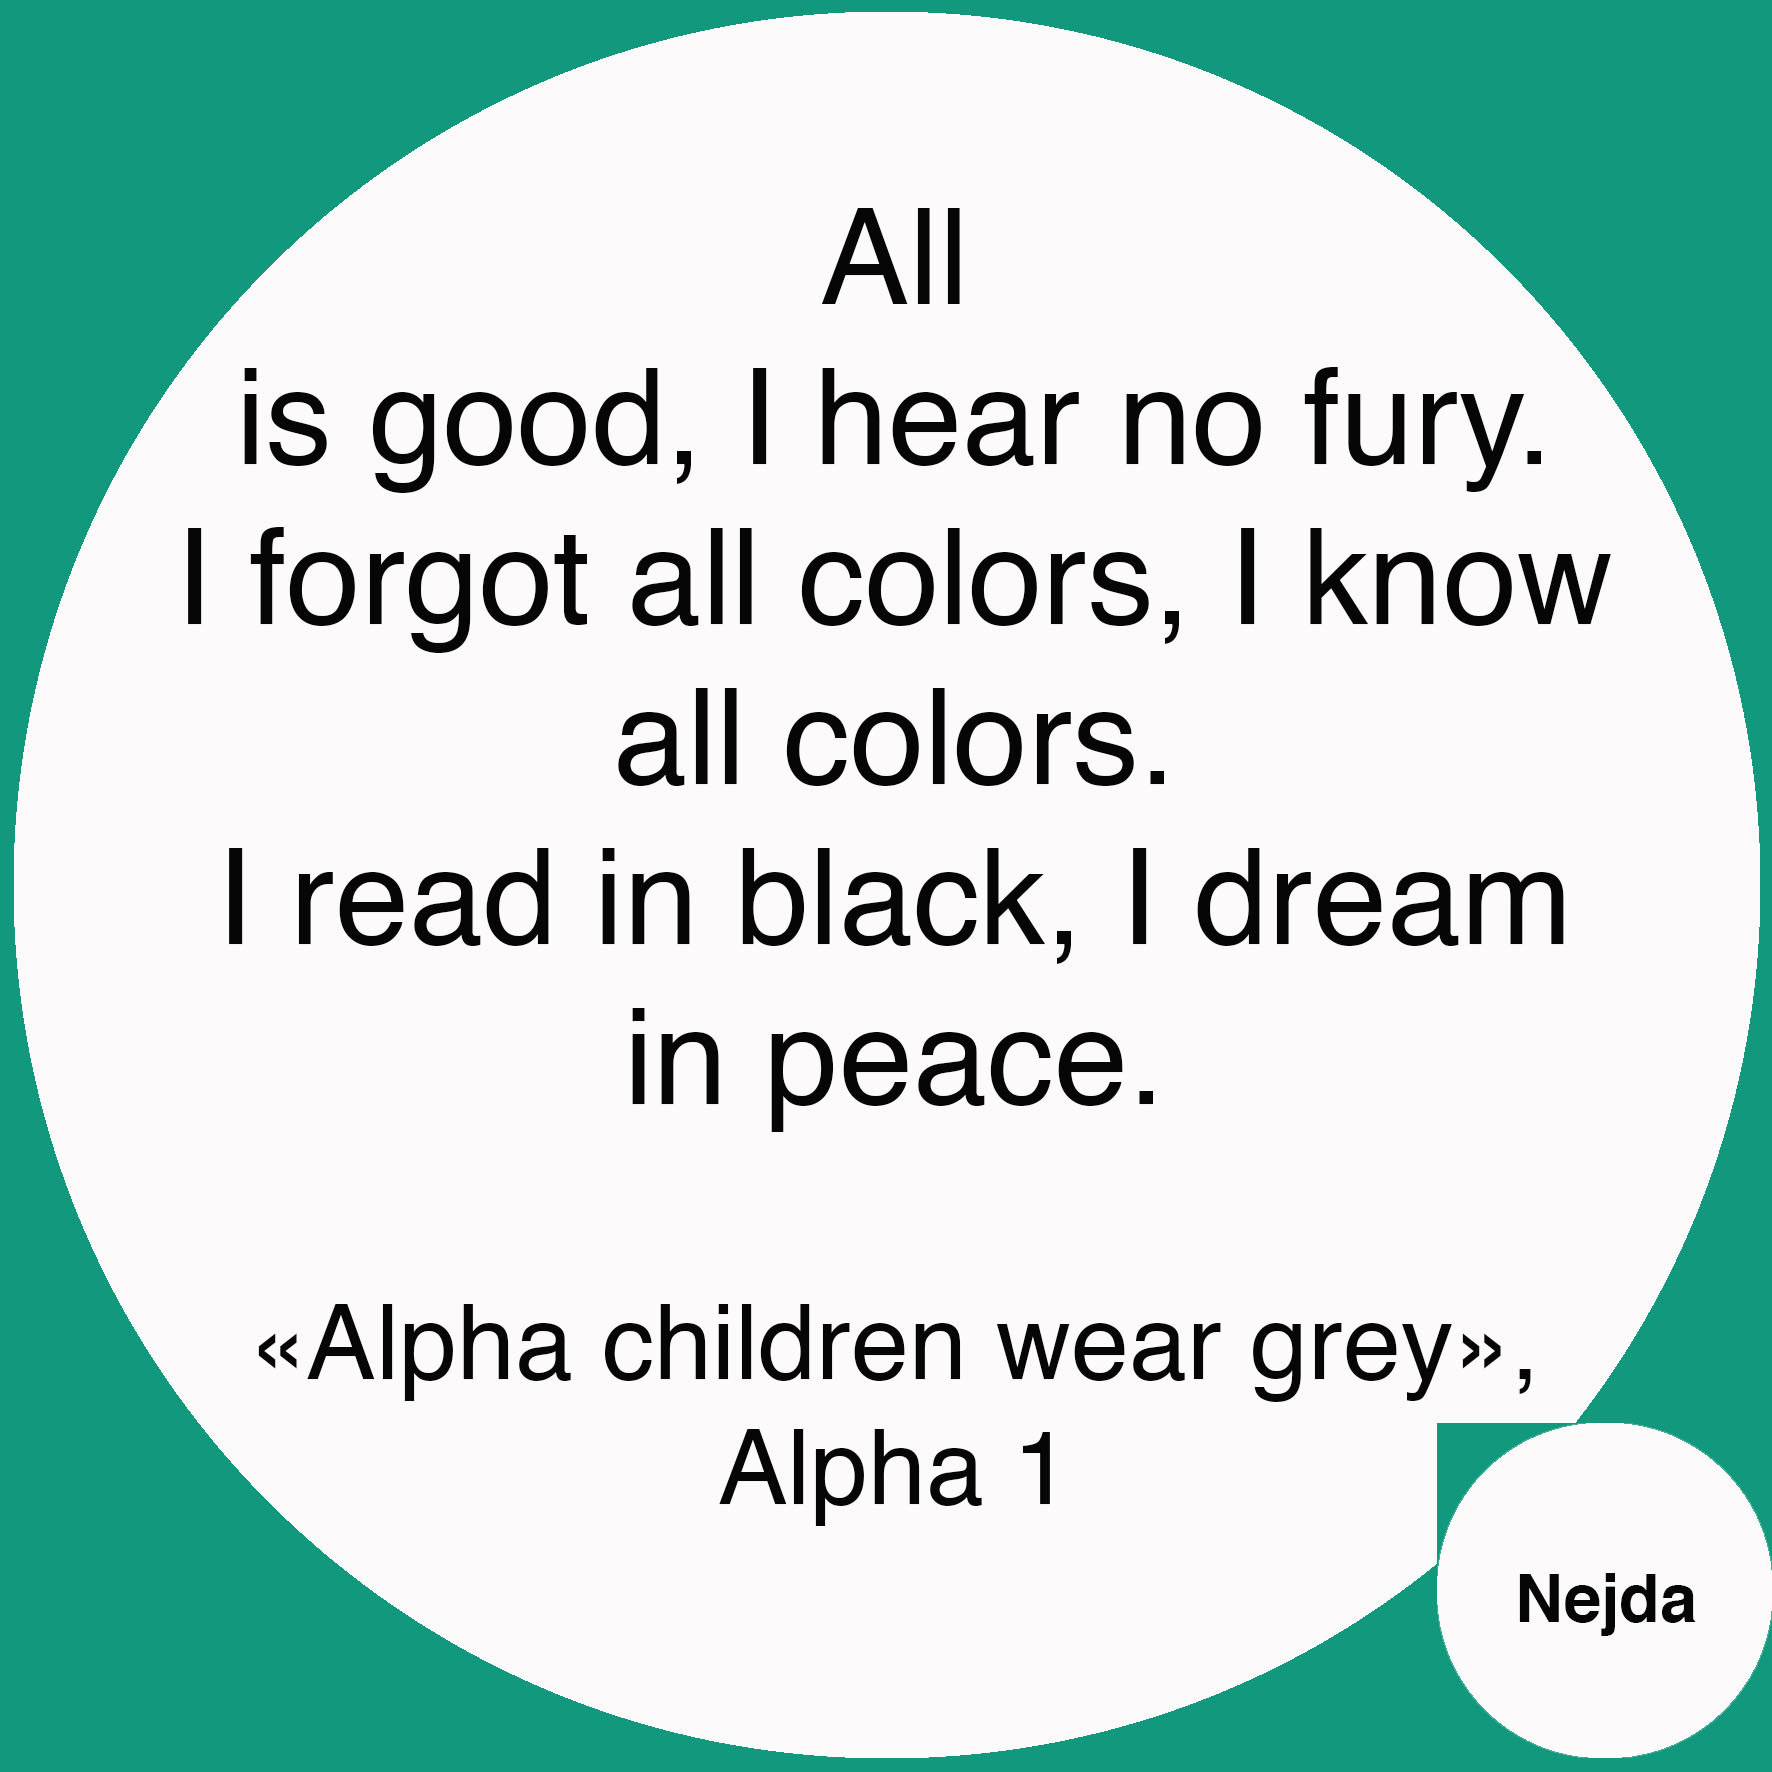 Alpha 1 - Alpha children wear grey